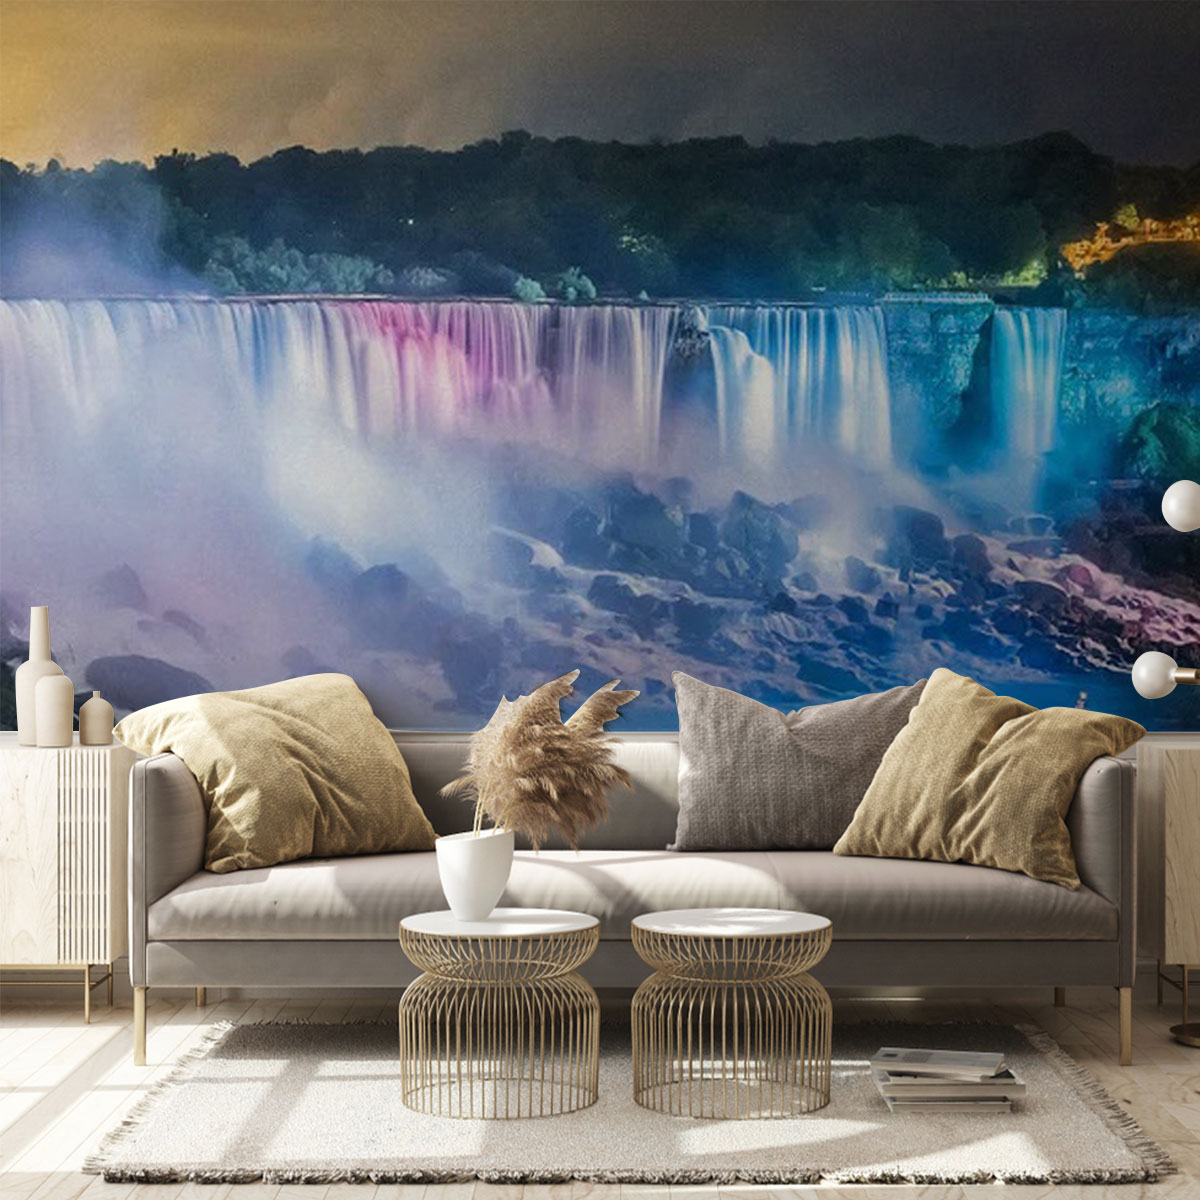 Niagara Falls by Night Wall Mural